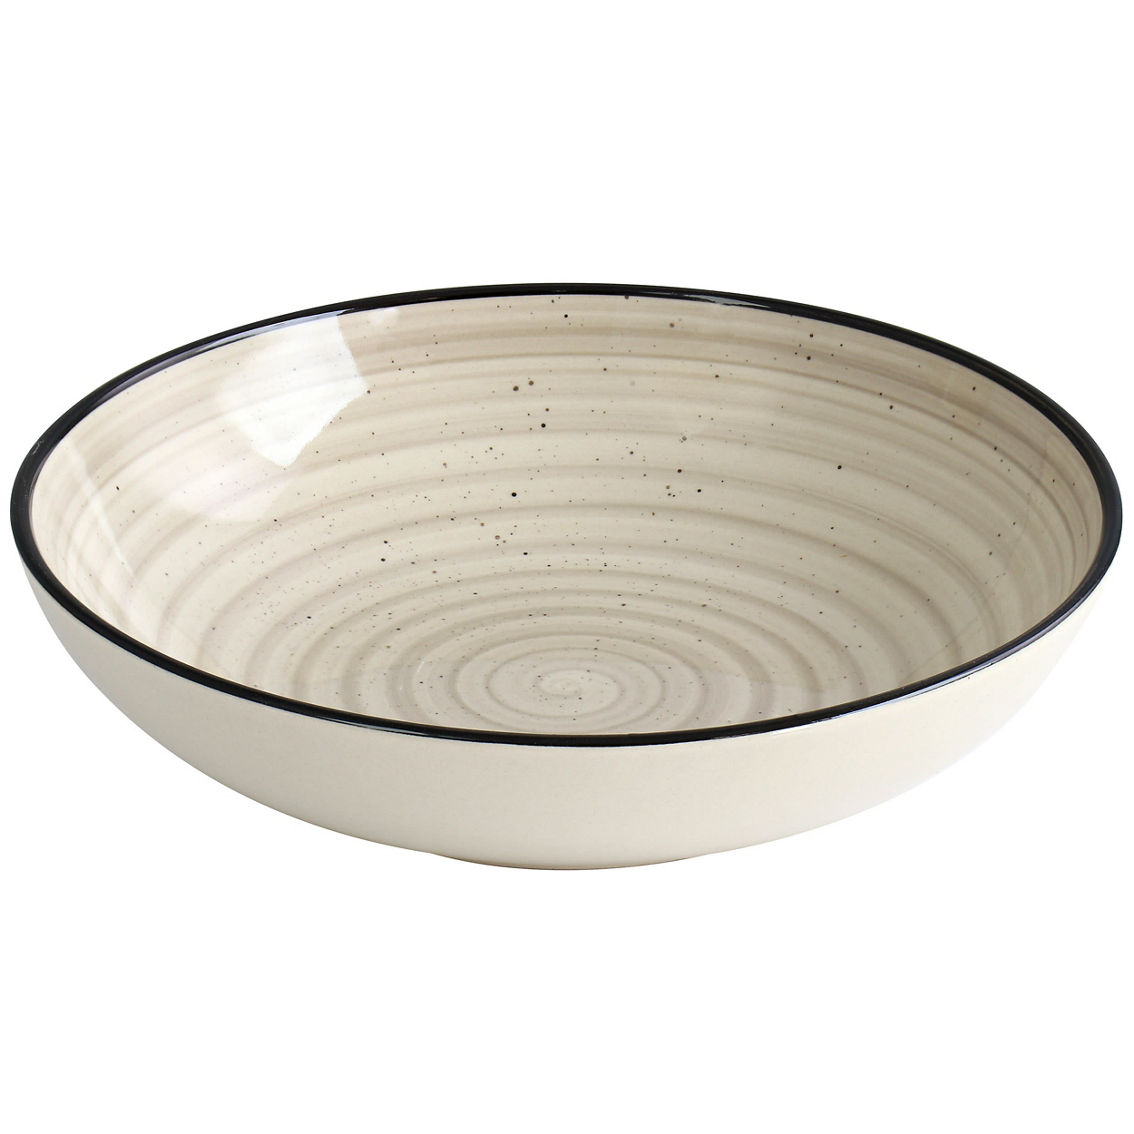 Elama Gia 24 Piece Round Stoneware Dinnerware Set in Cream - Image 4 of 5